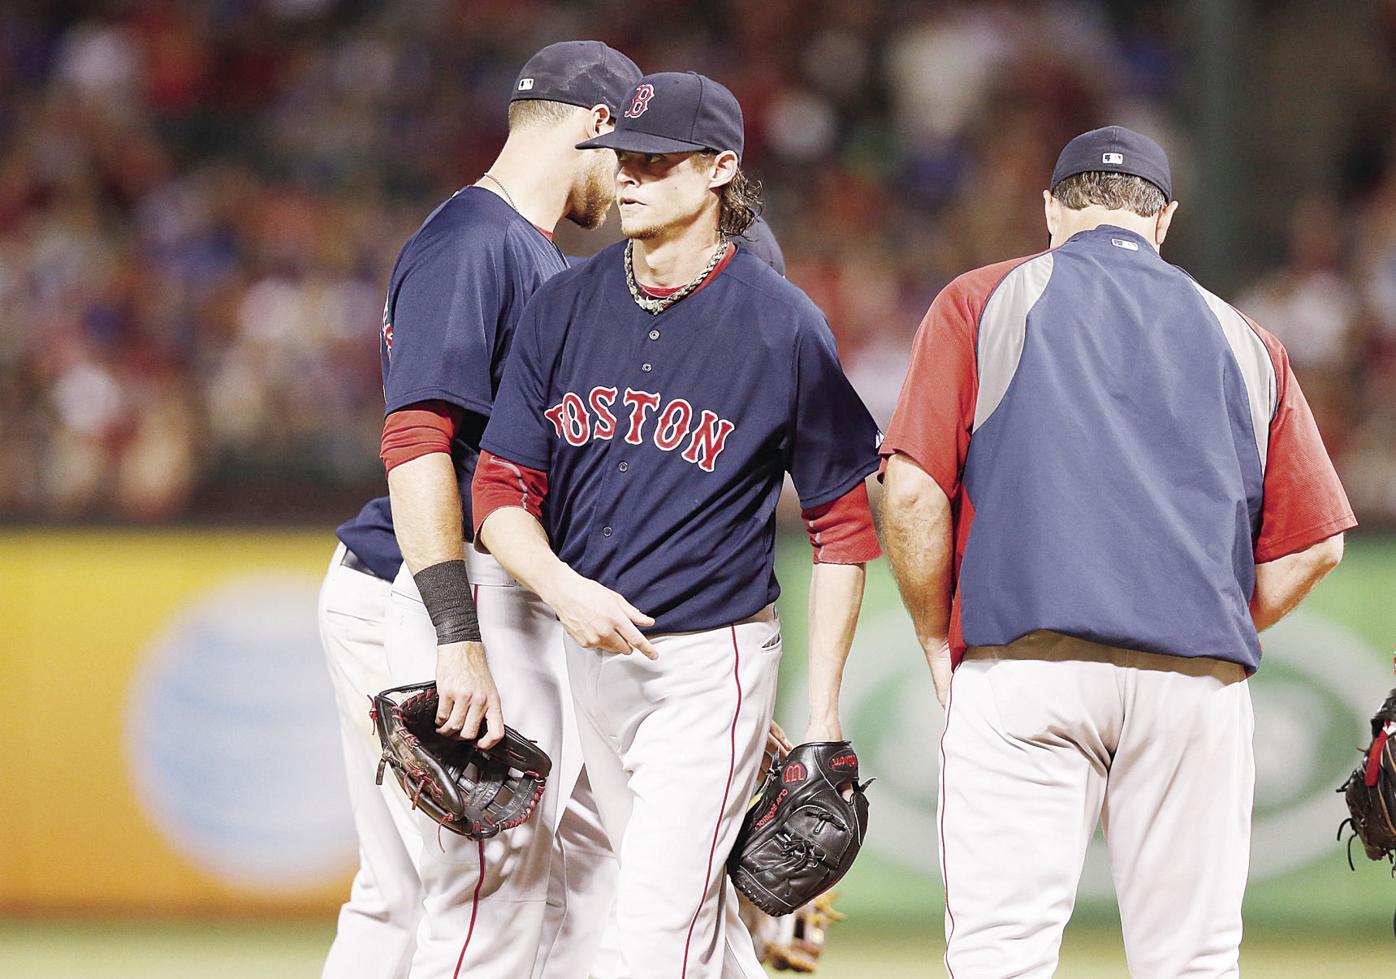 A.J. Pierzynski has key hit for Red Sox - The Boston Globe